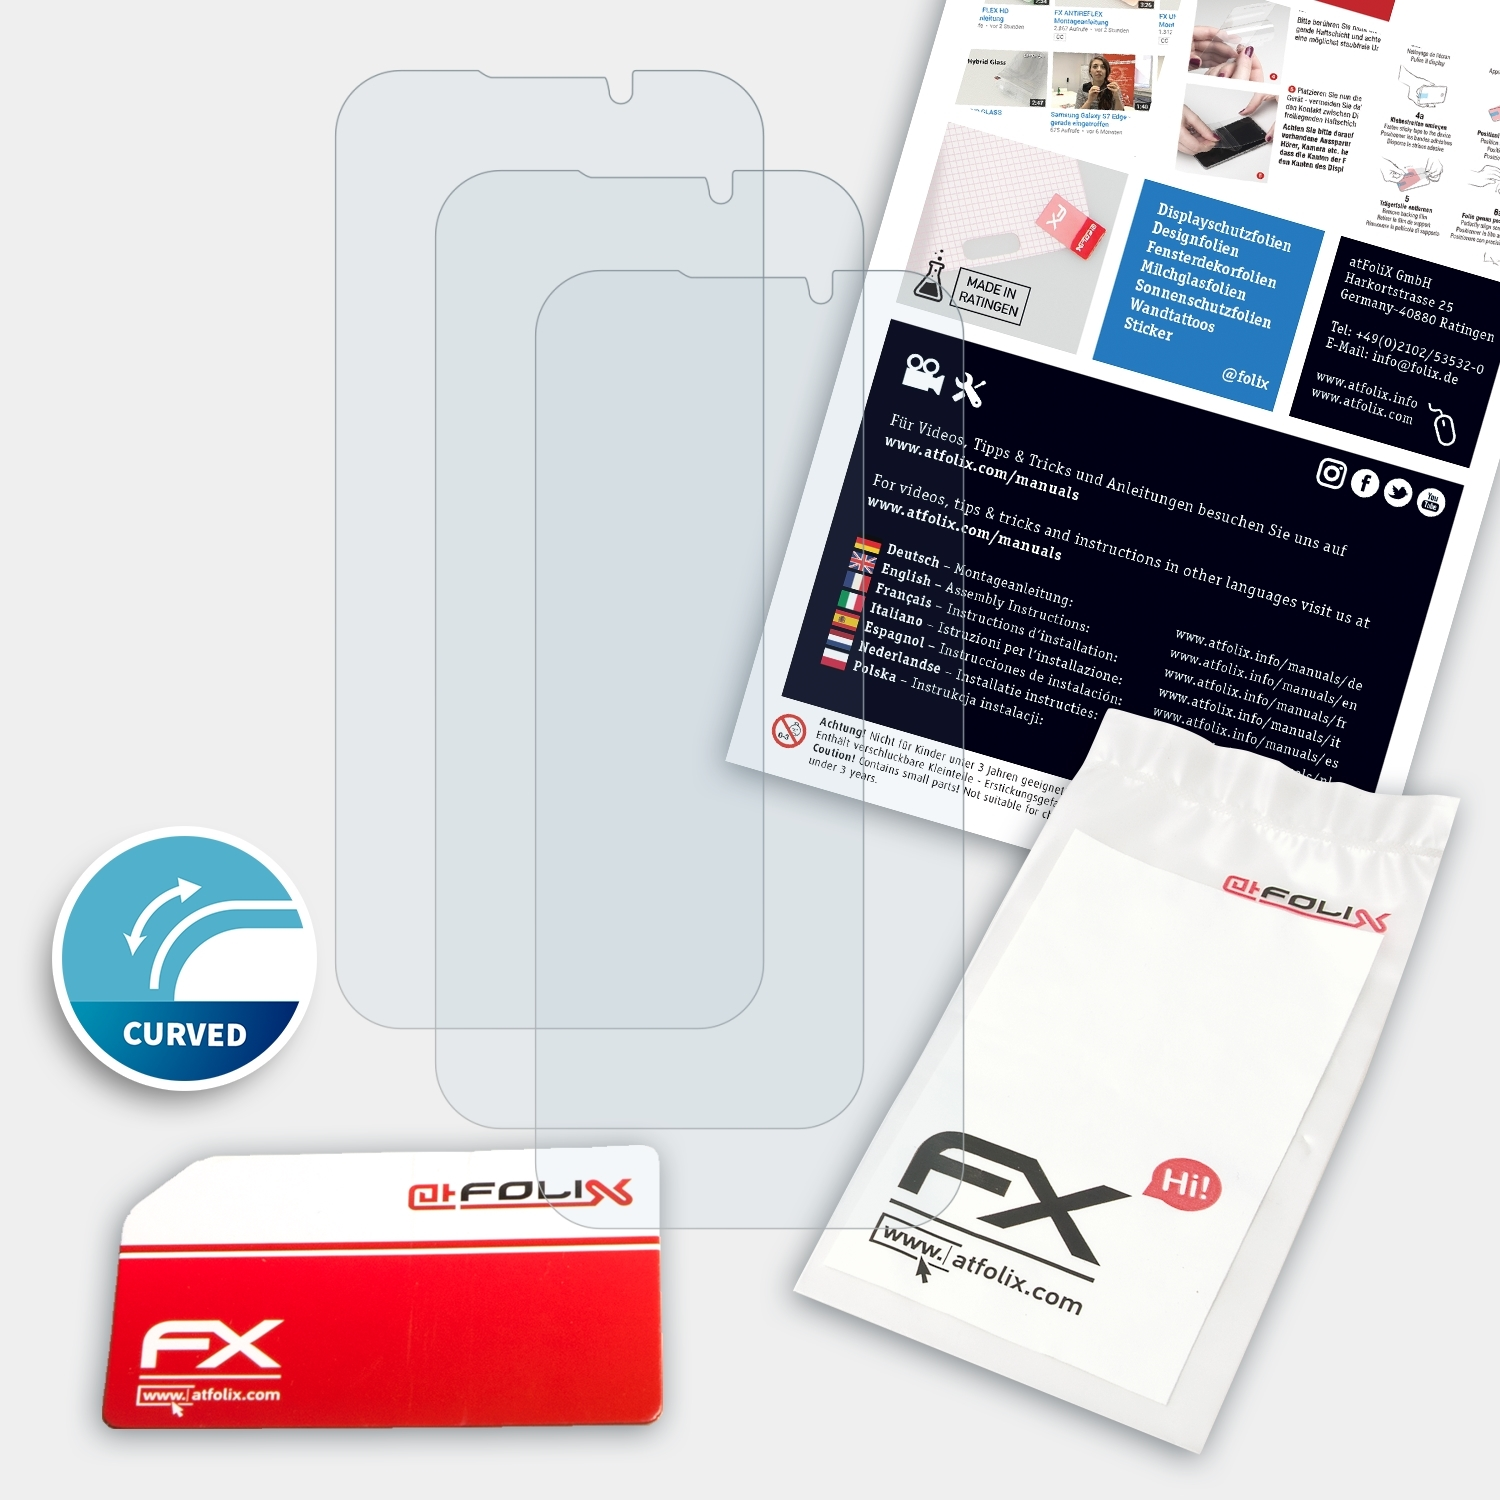 Xiaomi Pro) FX-ActiFleX Shark Displayschutz(für ATFOLIX 3x 2 Black